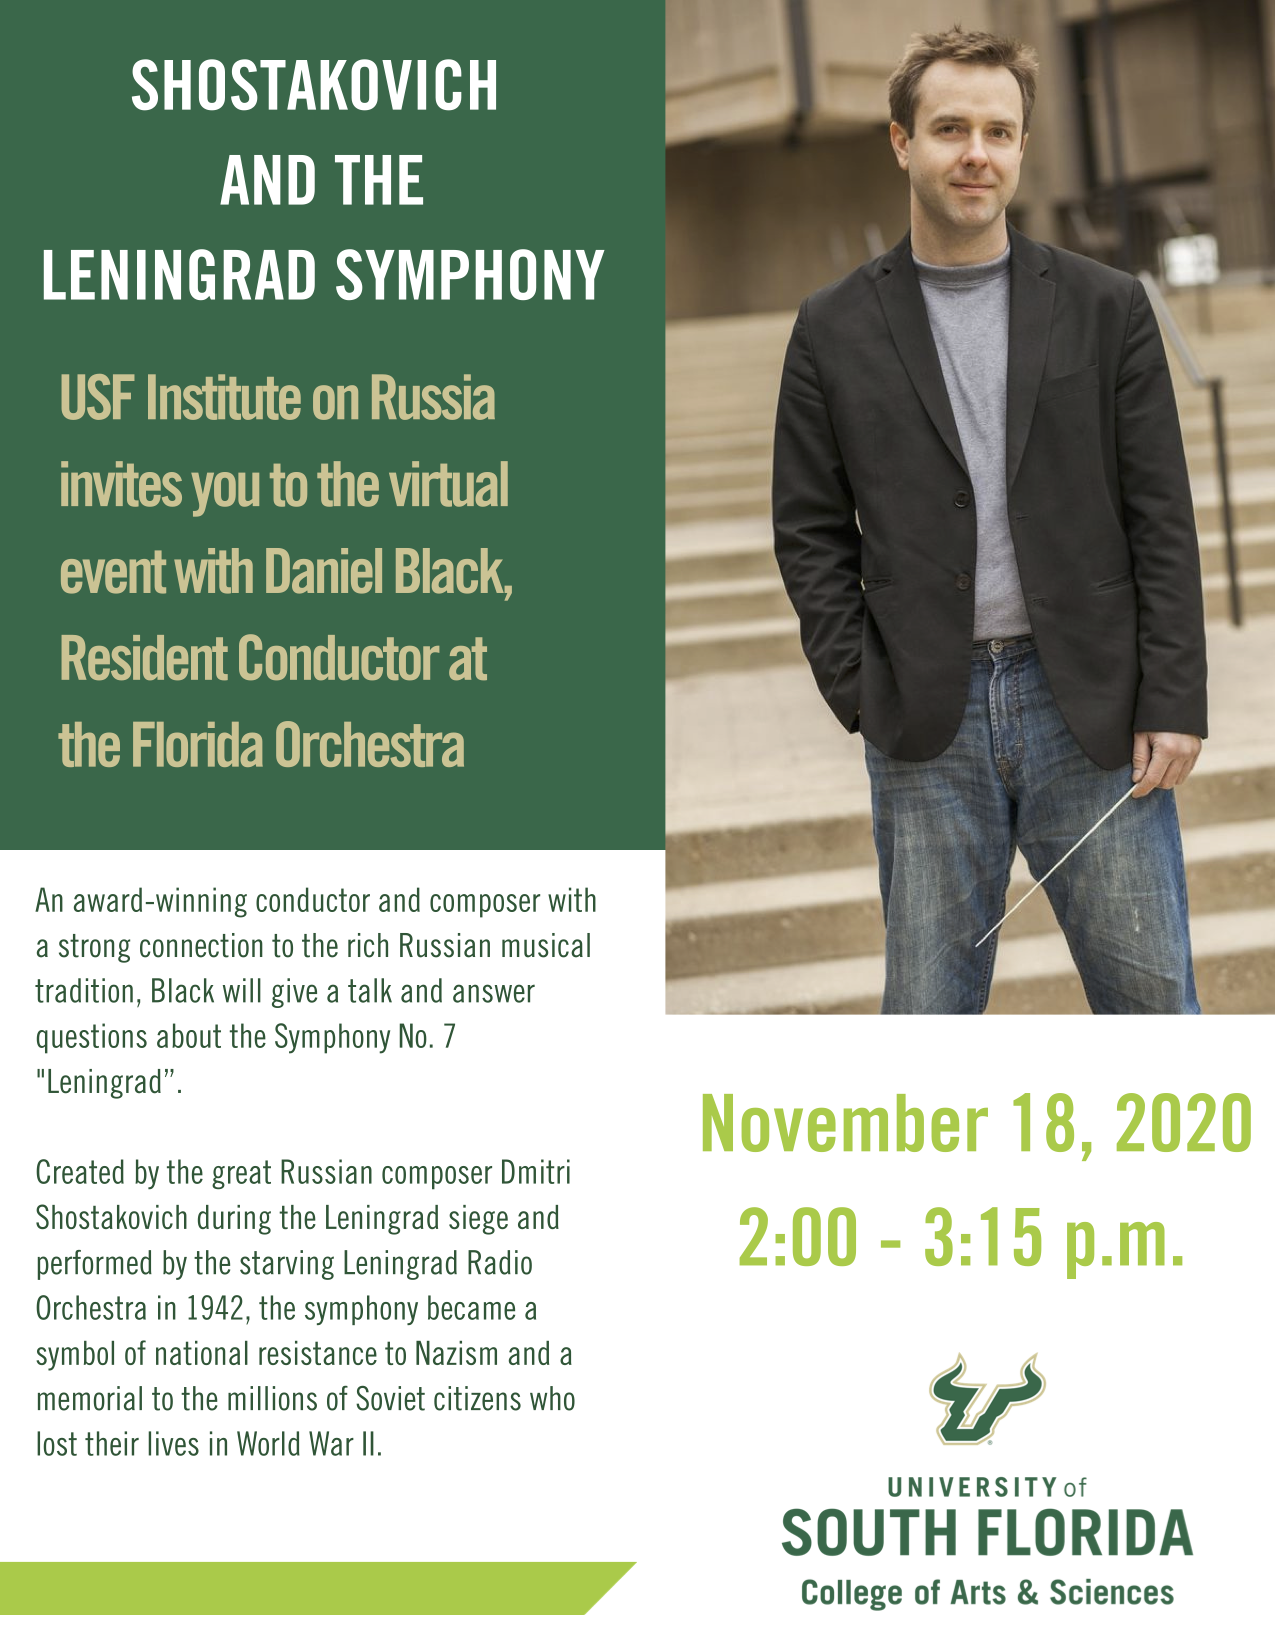 Shostakovich and the Leningrad Symphony event flyer